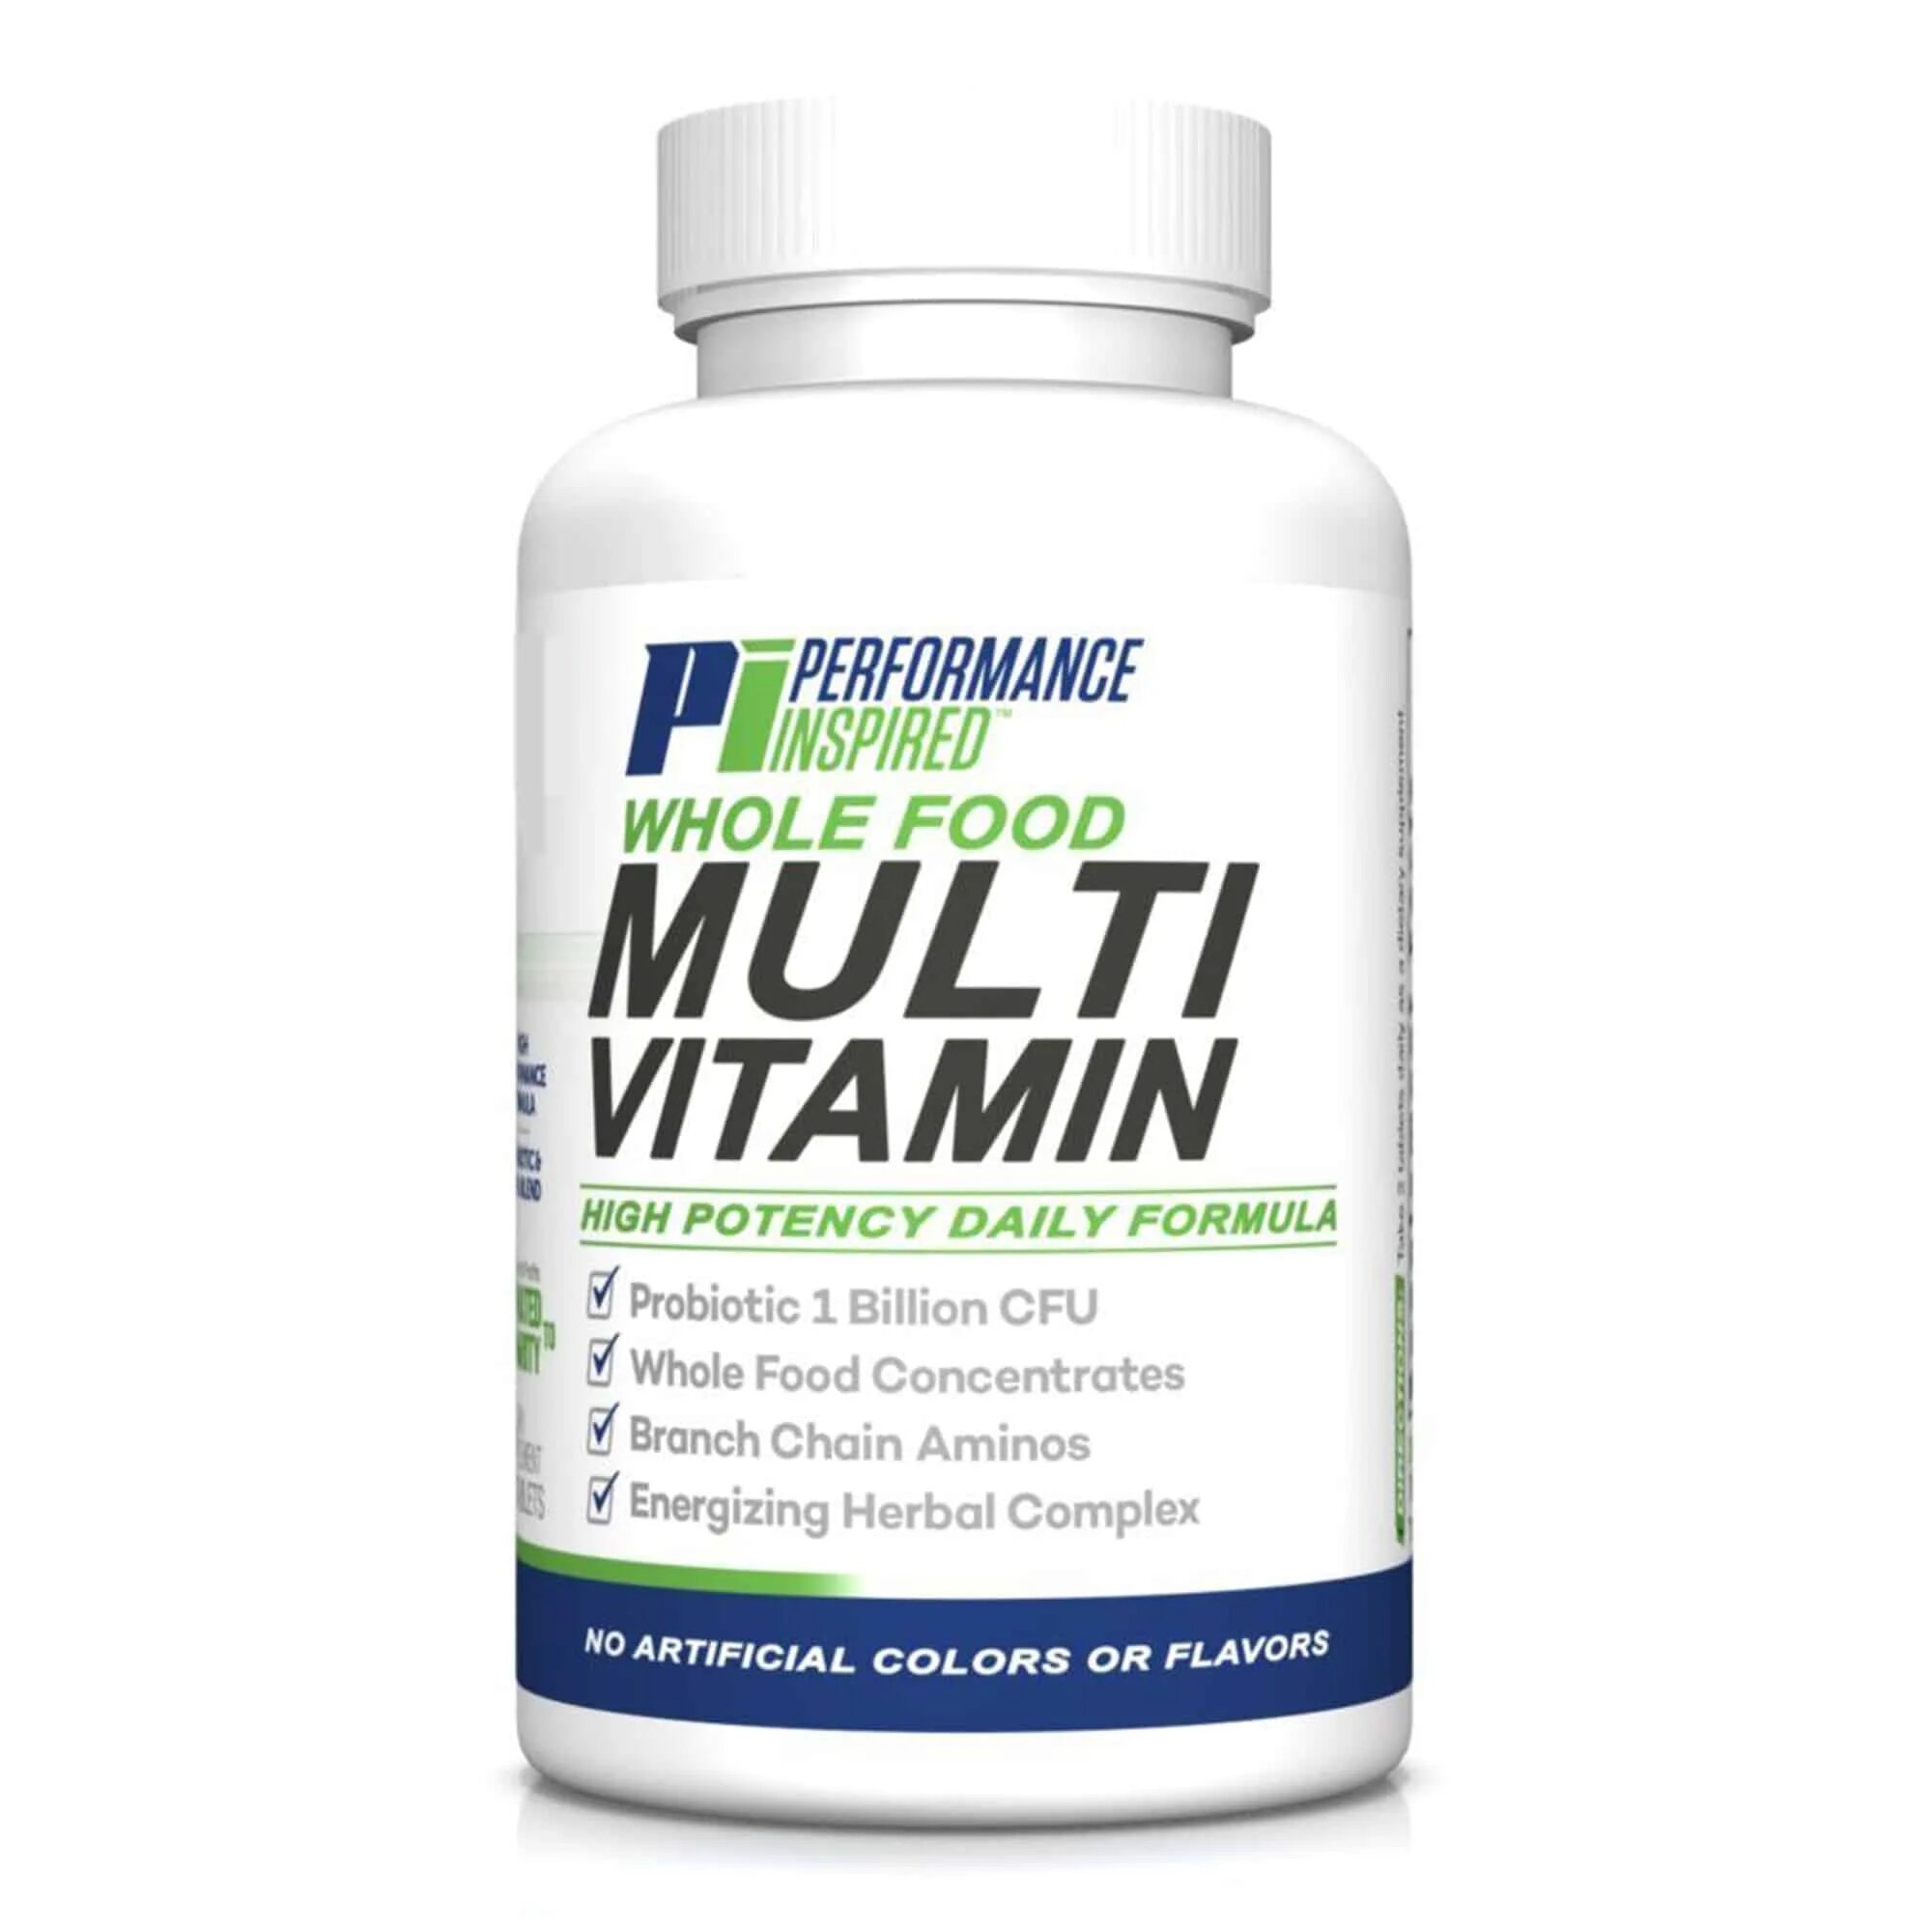 Vitamins potency. Мультивитамины. Витамины мультивитамины. Мультивитамины таблетки. Мультивитамины спортивные.